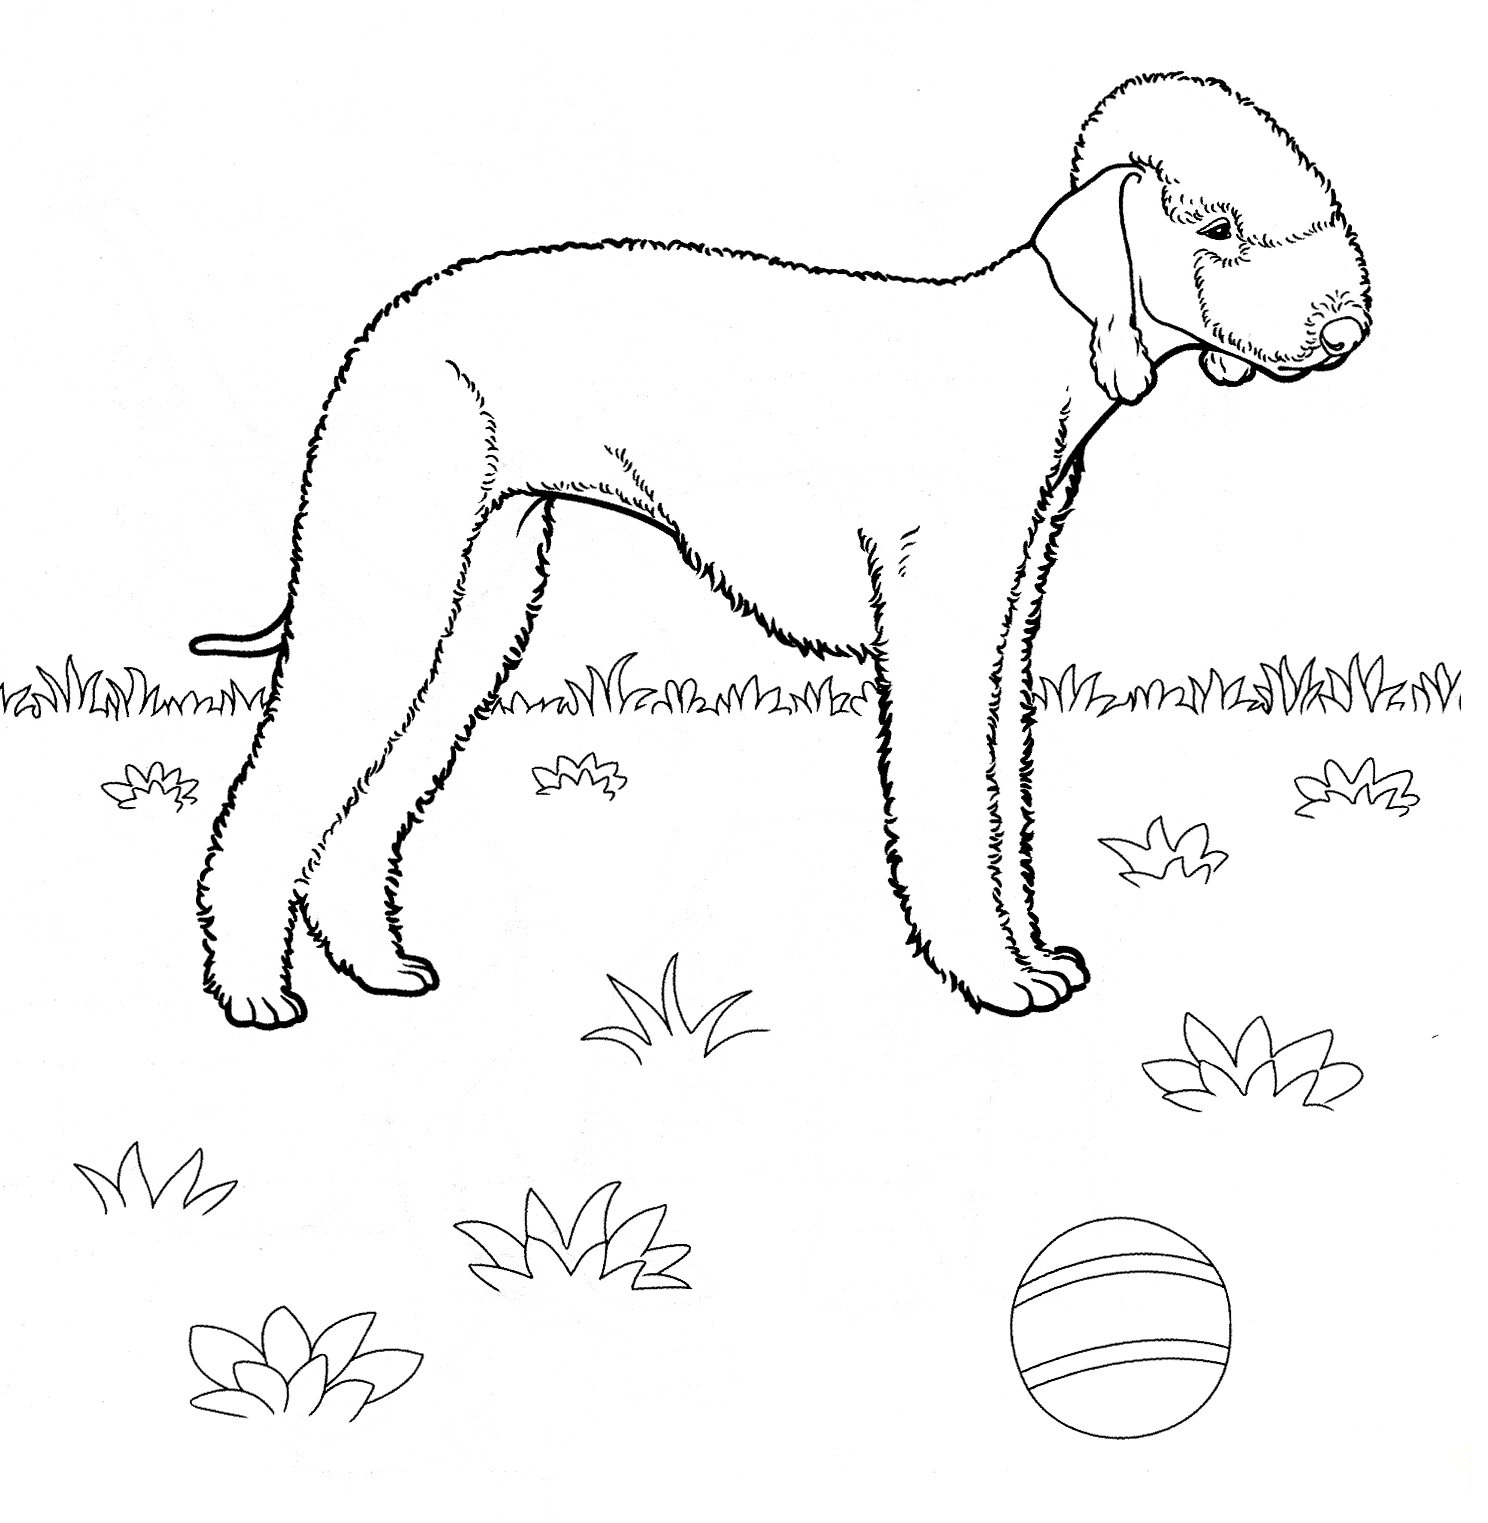 Bedlington Terrier de perros